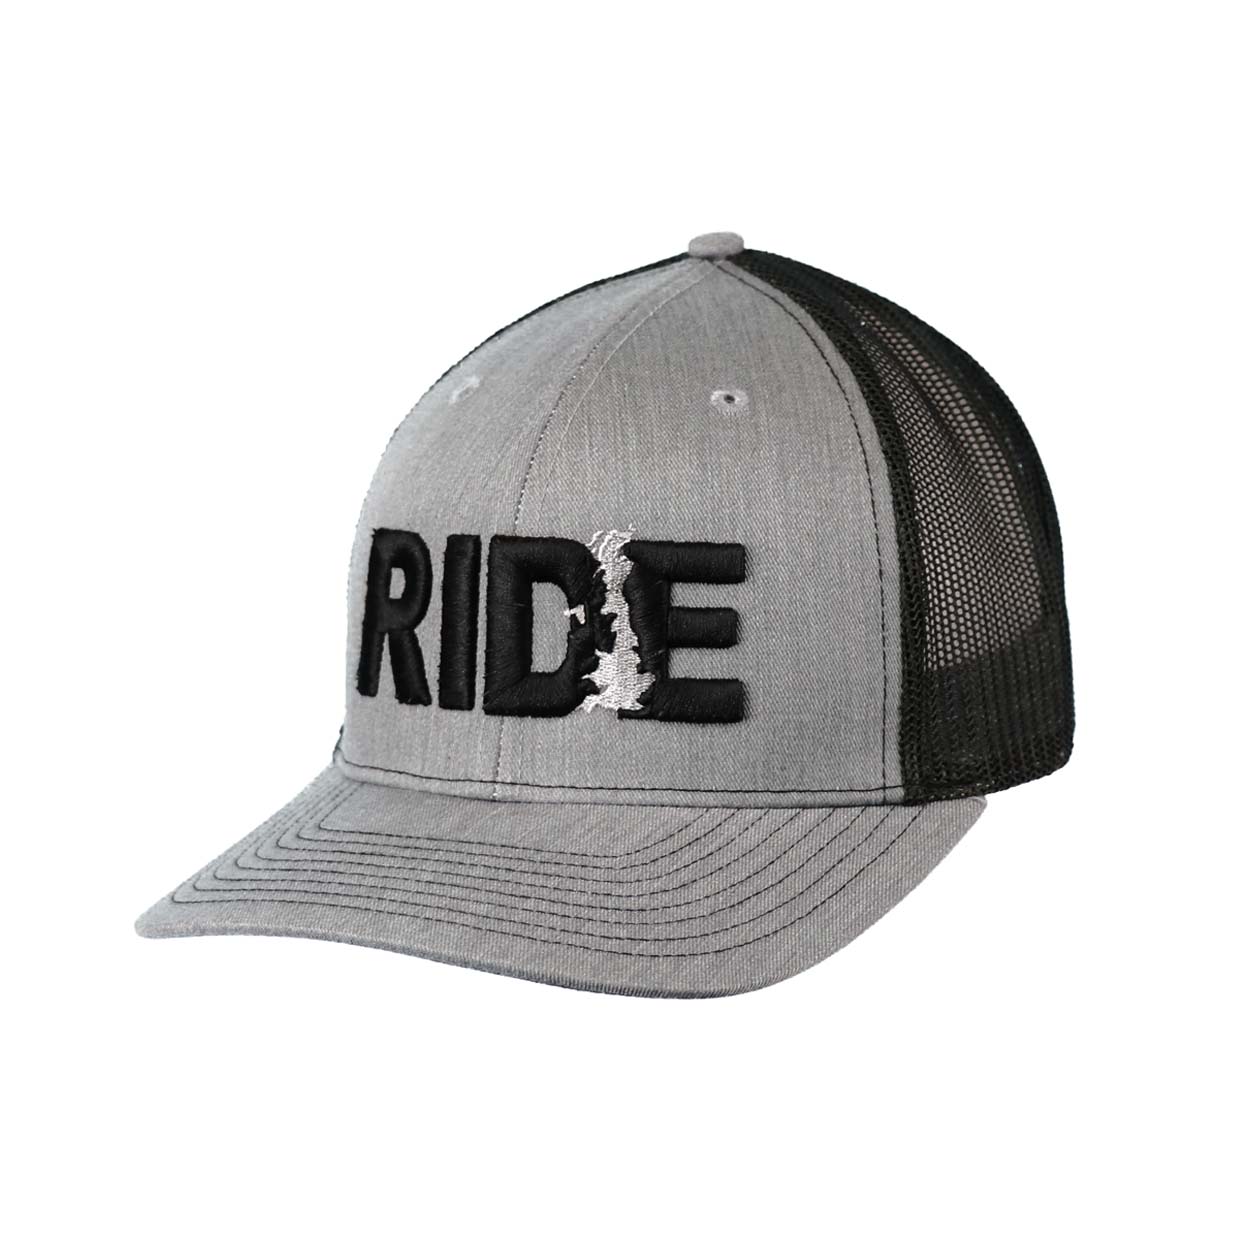 Ride United Kingdom Classic Embroidered Snapback Trucker Hat Heather Gray/Black